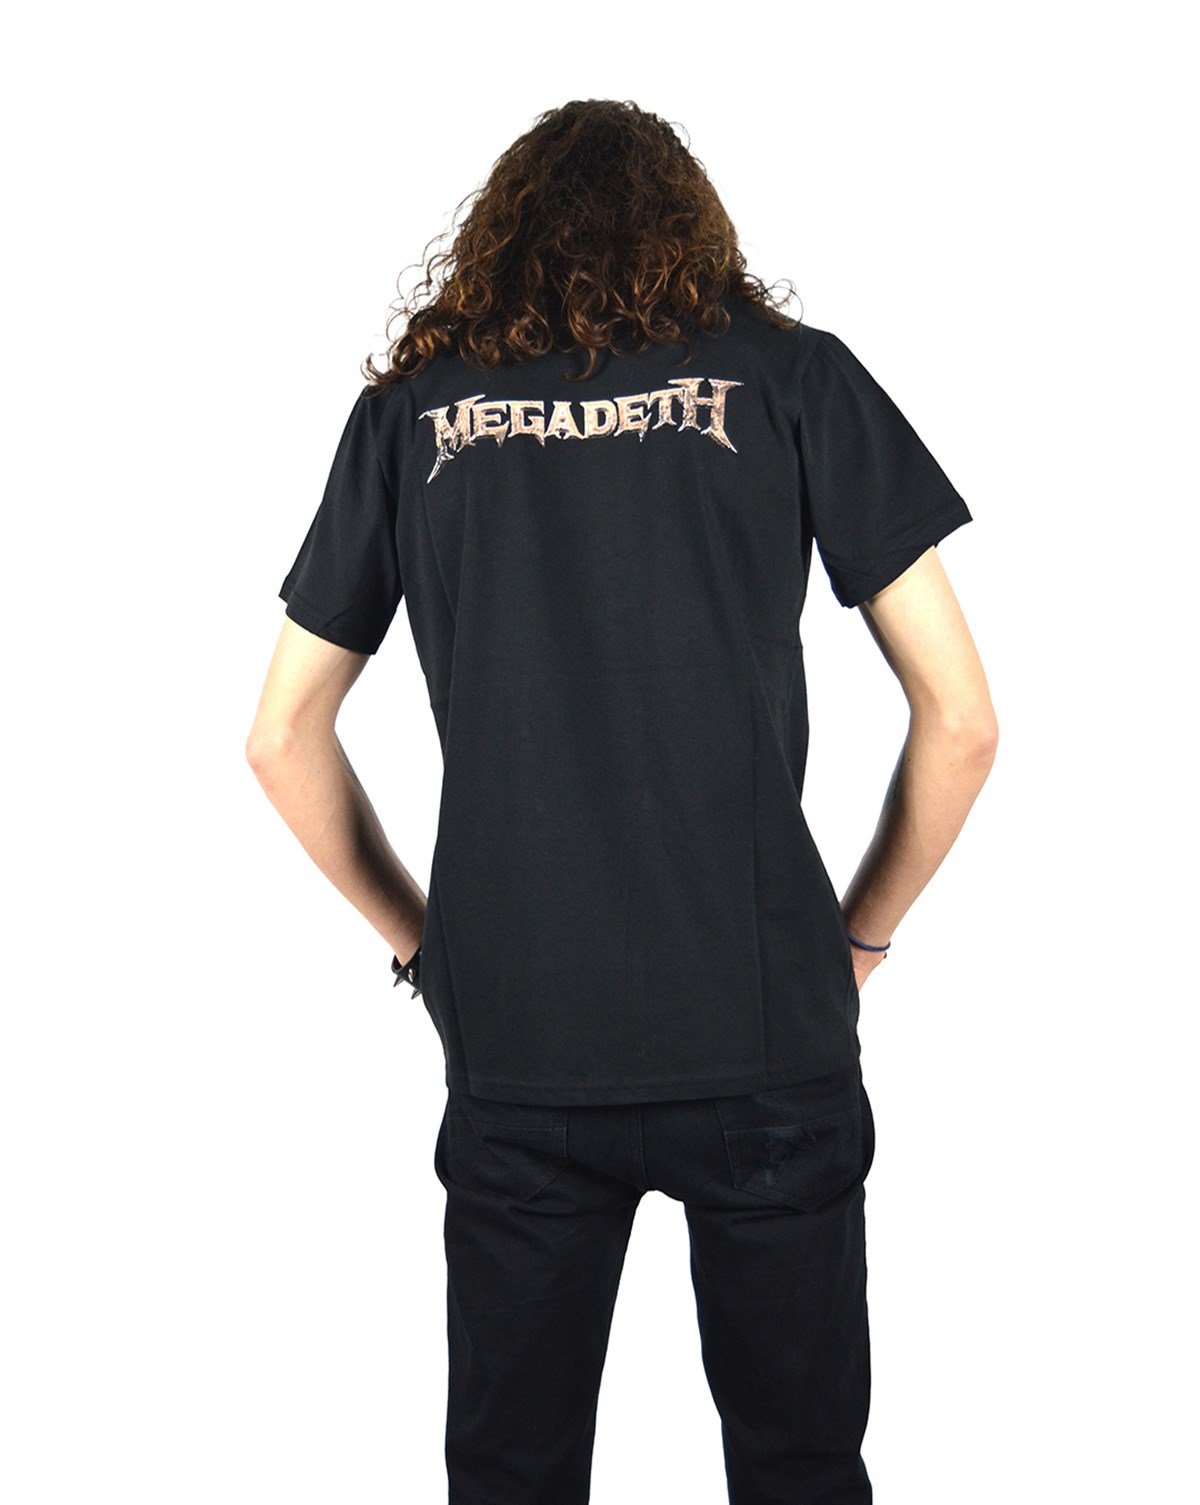 MEGADETH T-Shirt